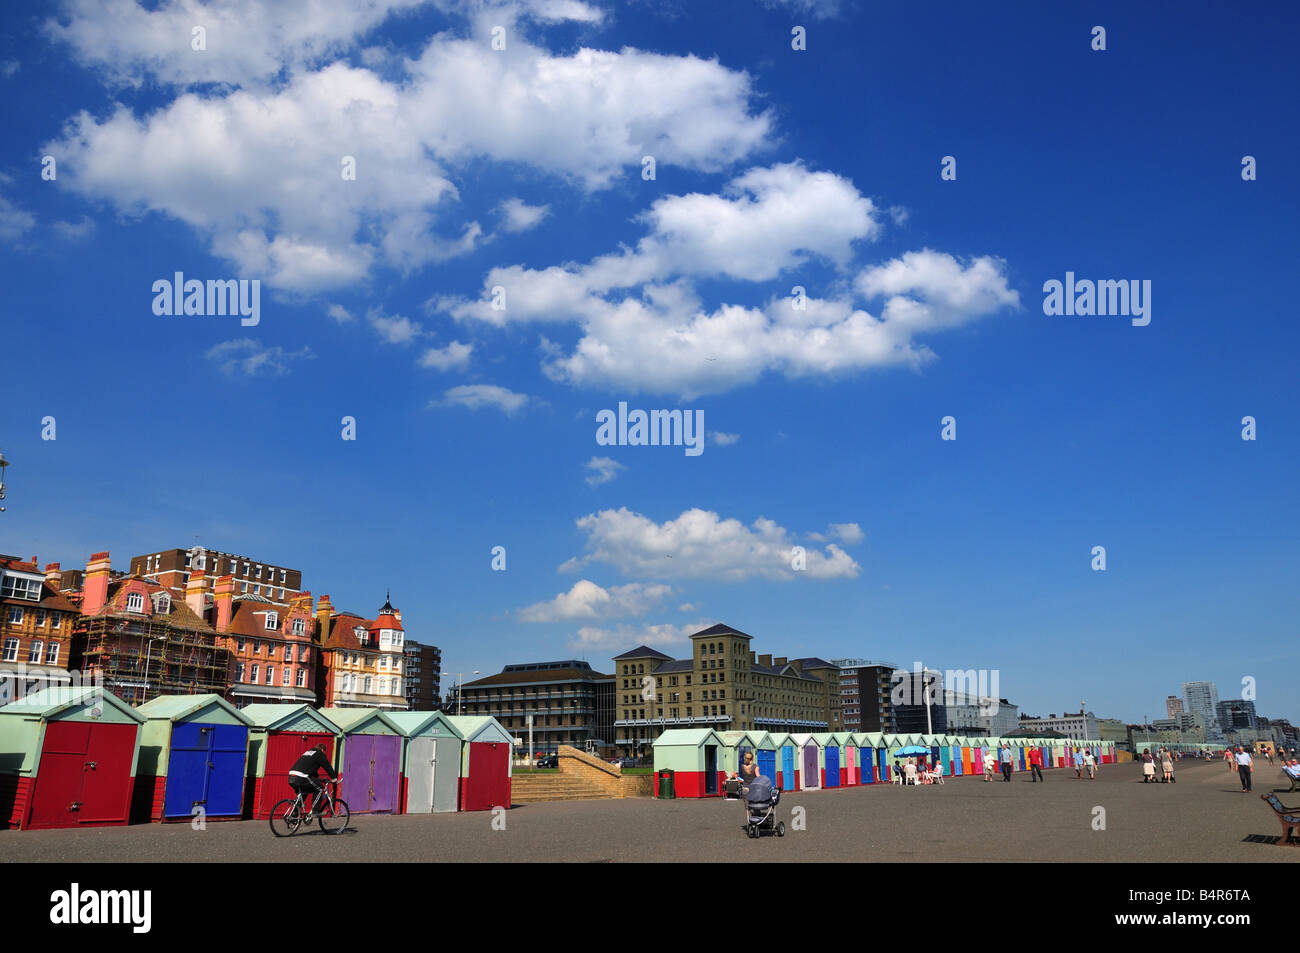 Hove Strandpromenade promenade mit bunten Strandhäuschen, East Sussex, England, GB Stockfoto